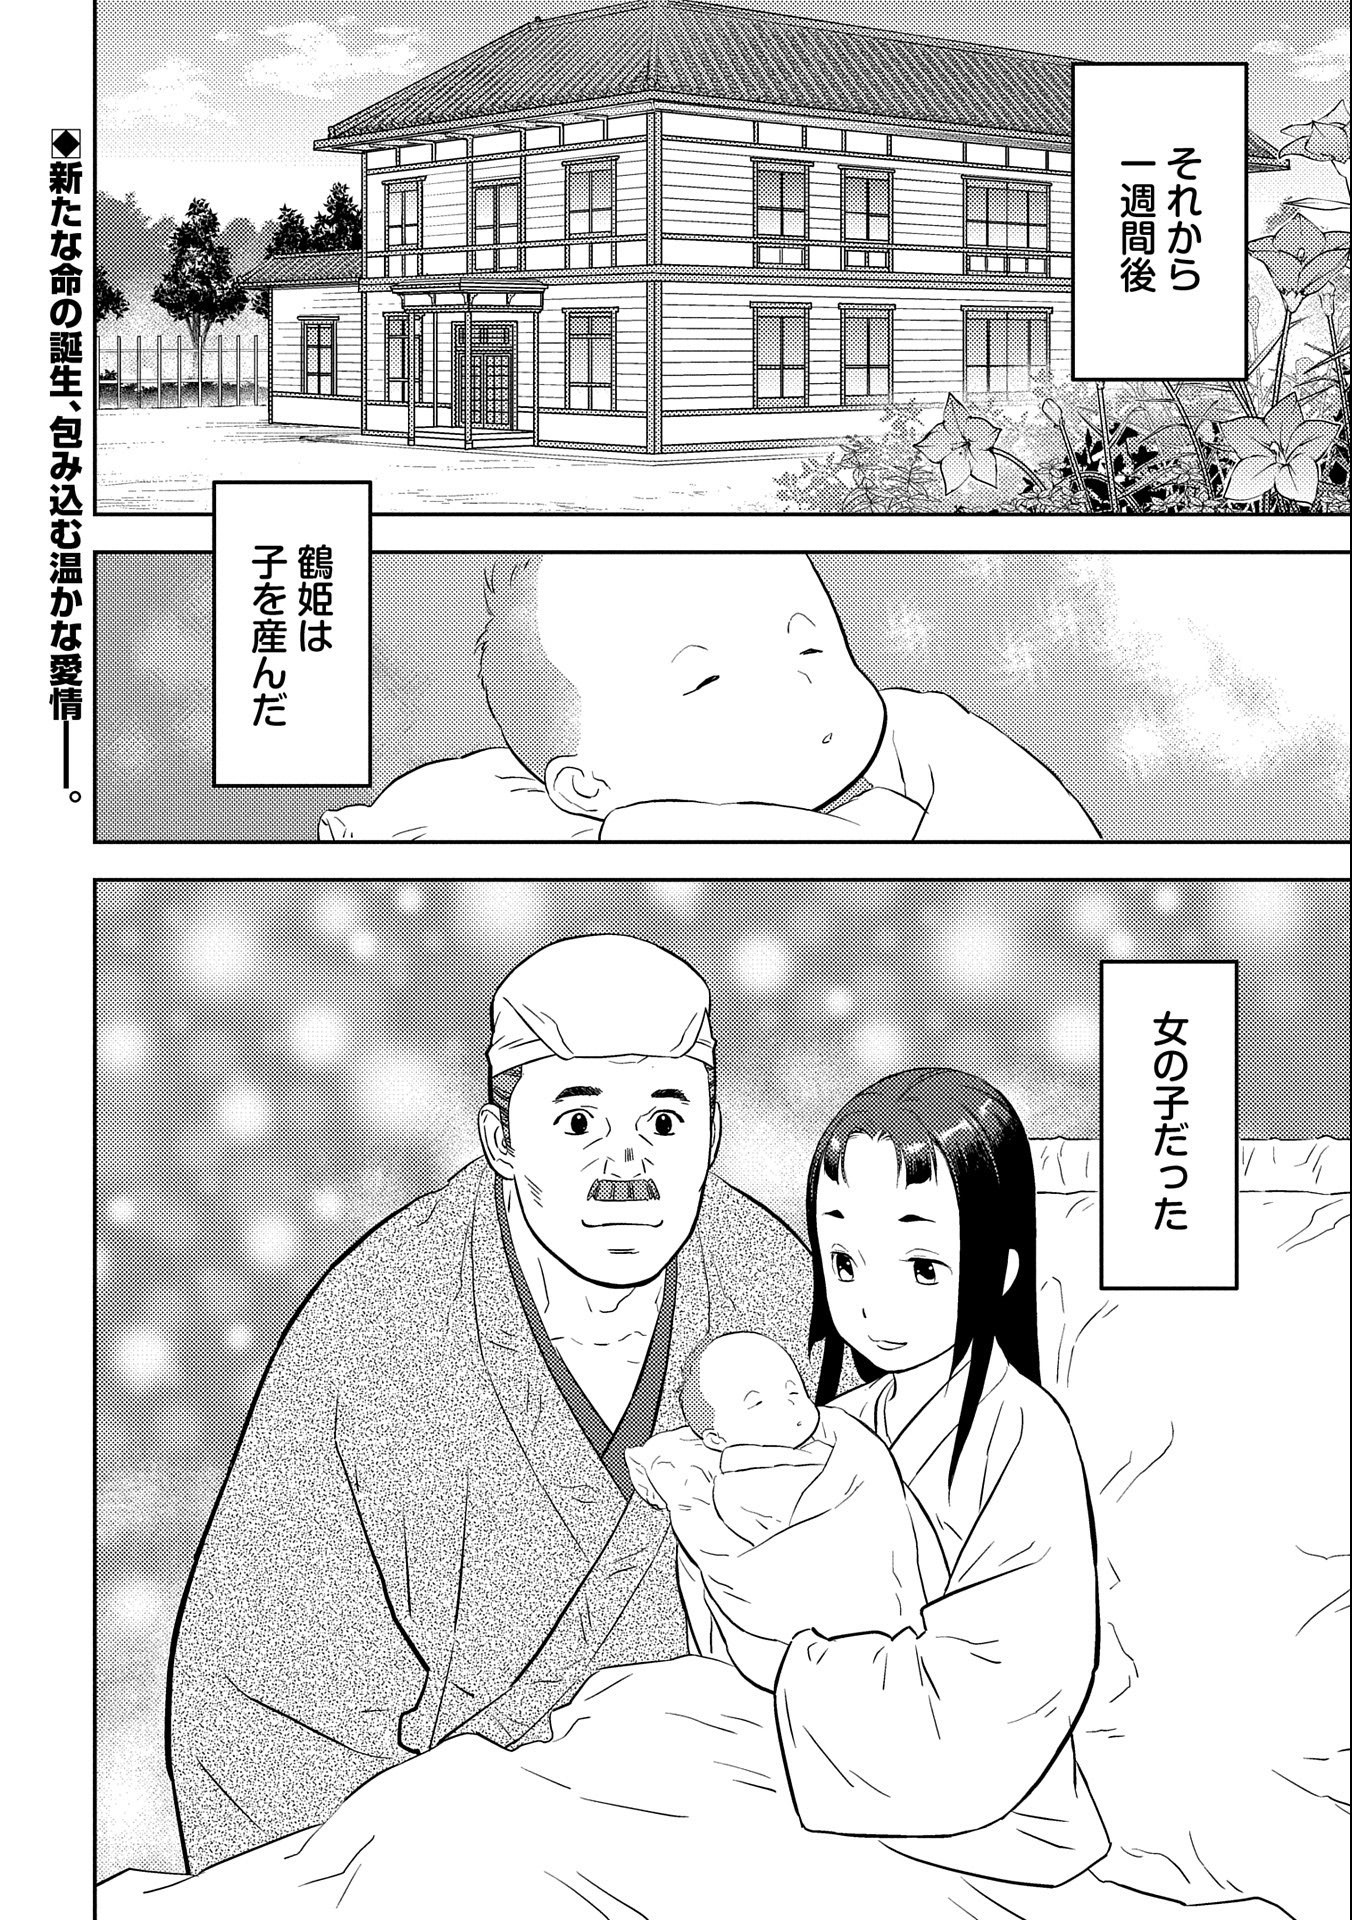 Sengoku Komachi Kuroutan - Chapter 75 - Page 30